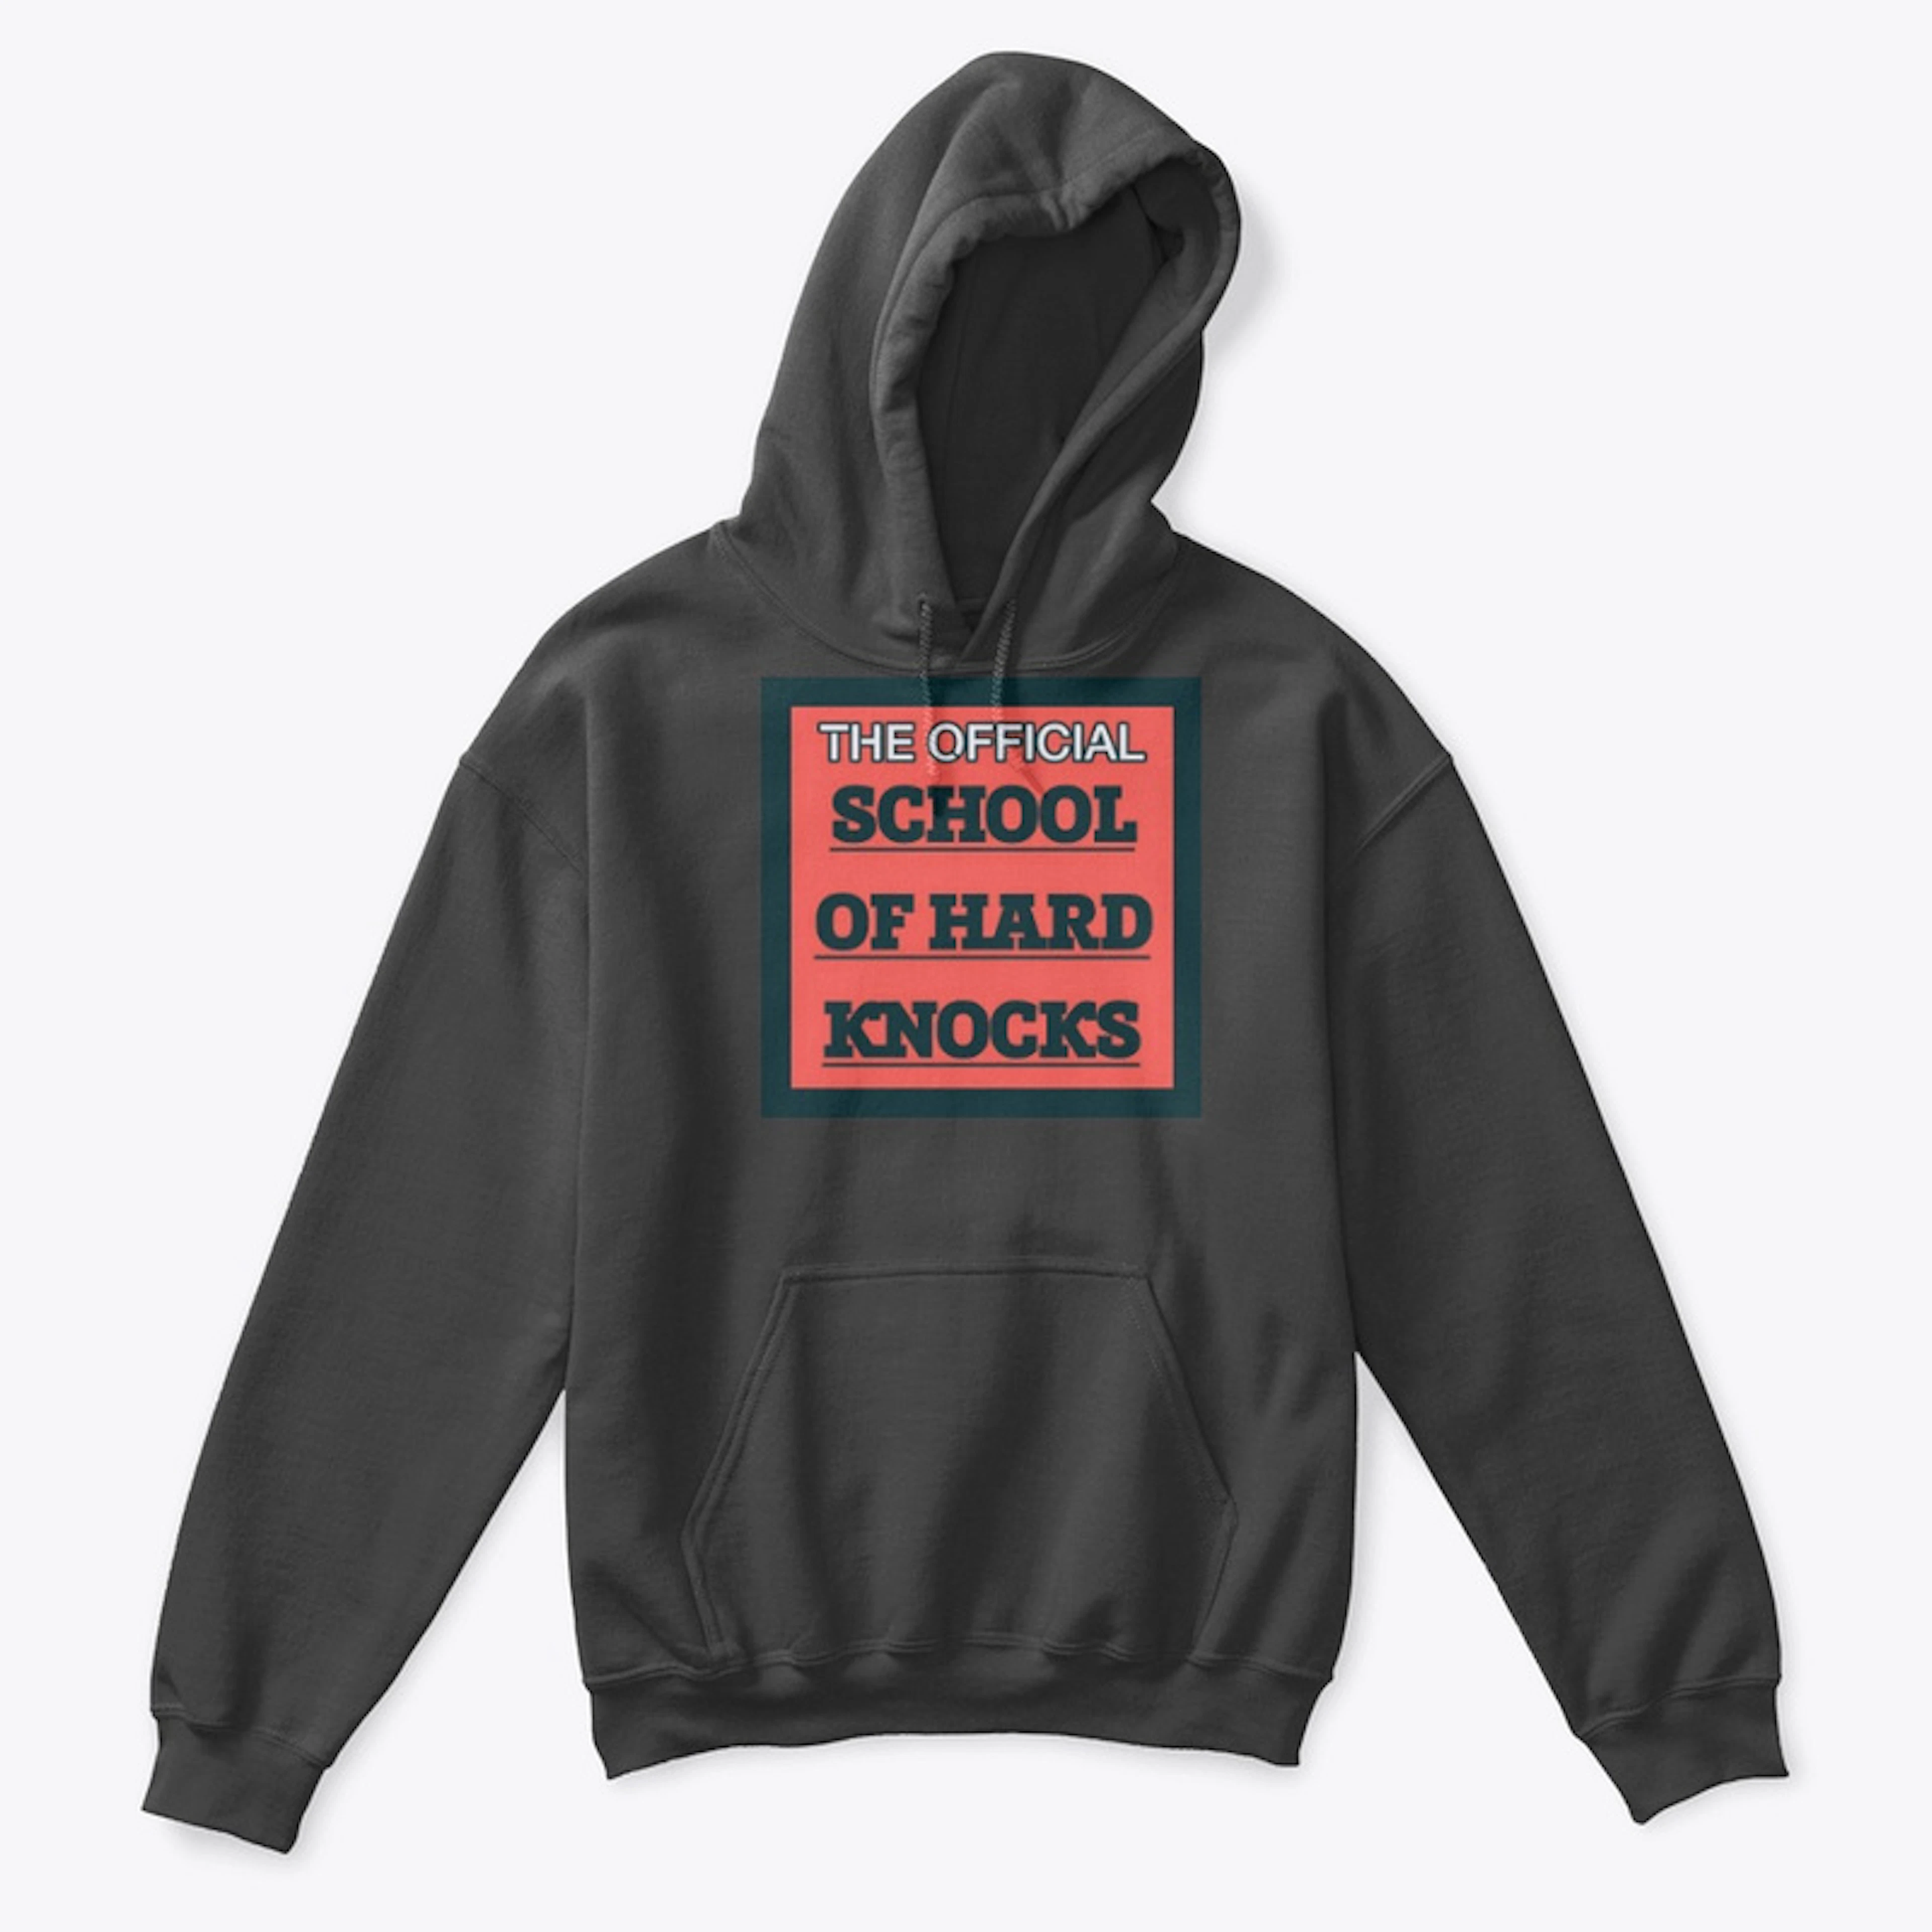 SCHOOL OF HARD KNOCKS by Nick Kabe